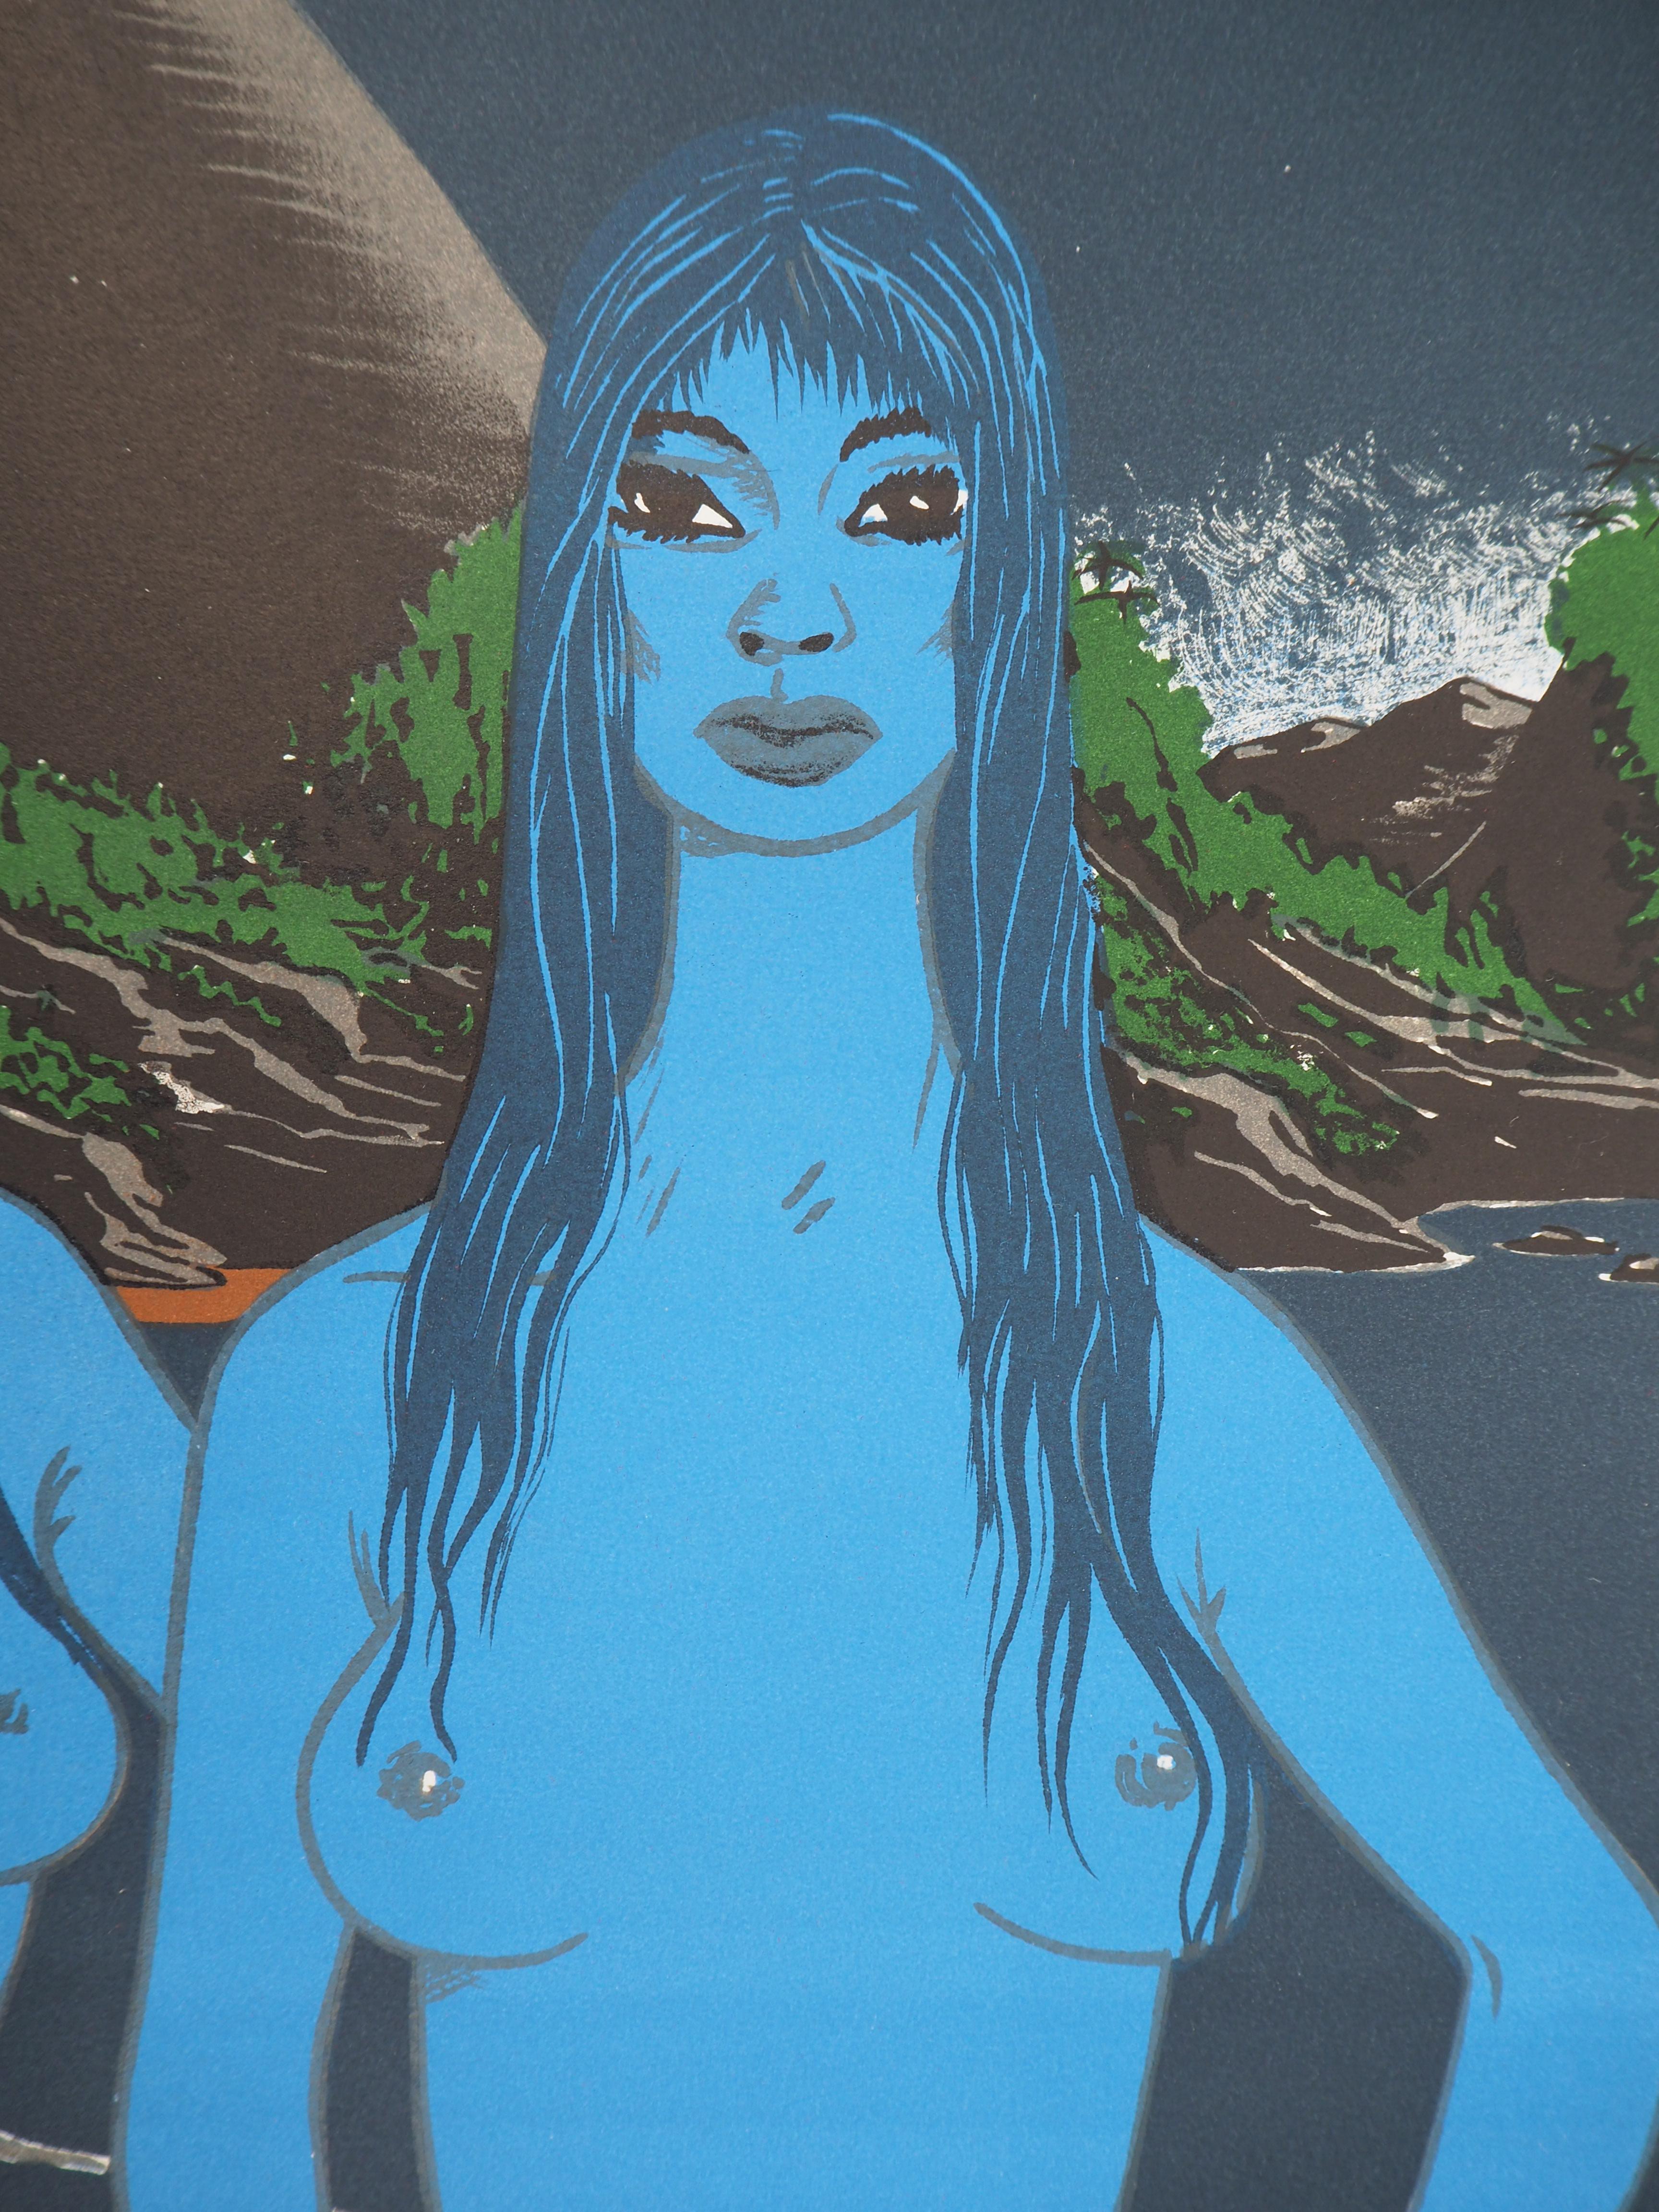 Felix LABISSE
The Blue Twins, 1966

Original lithograph
Handsigned in pencil
On Rives vellum 37 x 28 cm (c. 15 x 11 inch)

Excellent condition